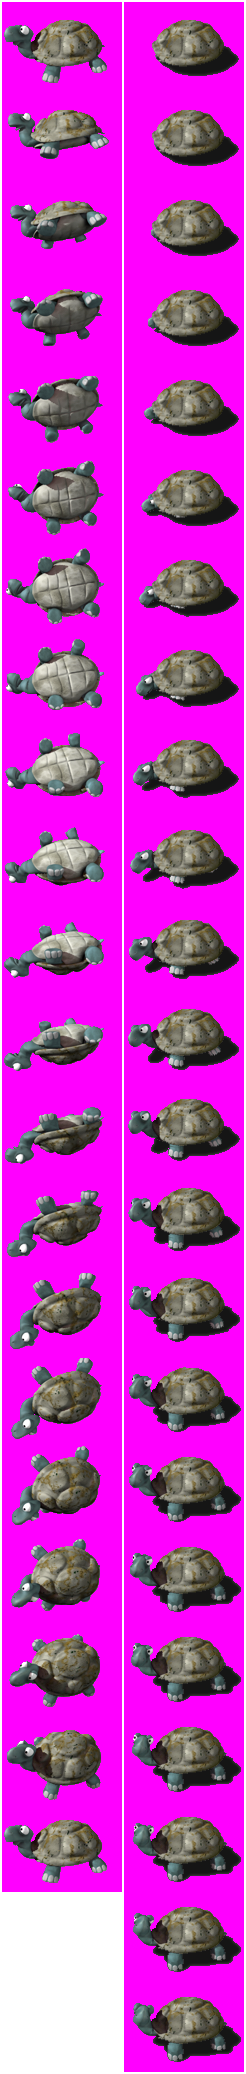 Moorhuhn 3: Es gibt Huhn - Turtle